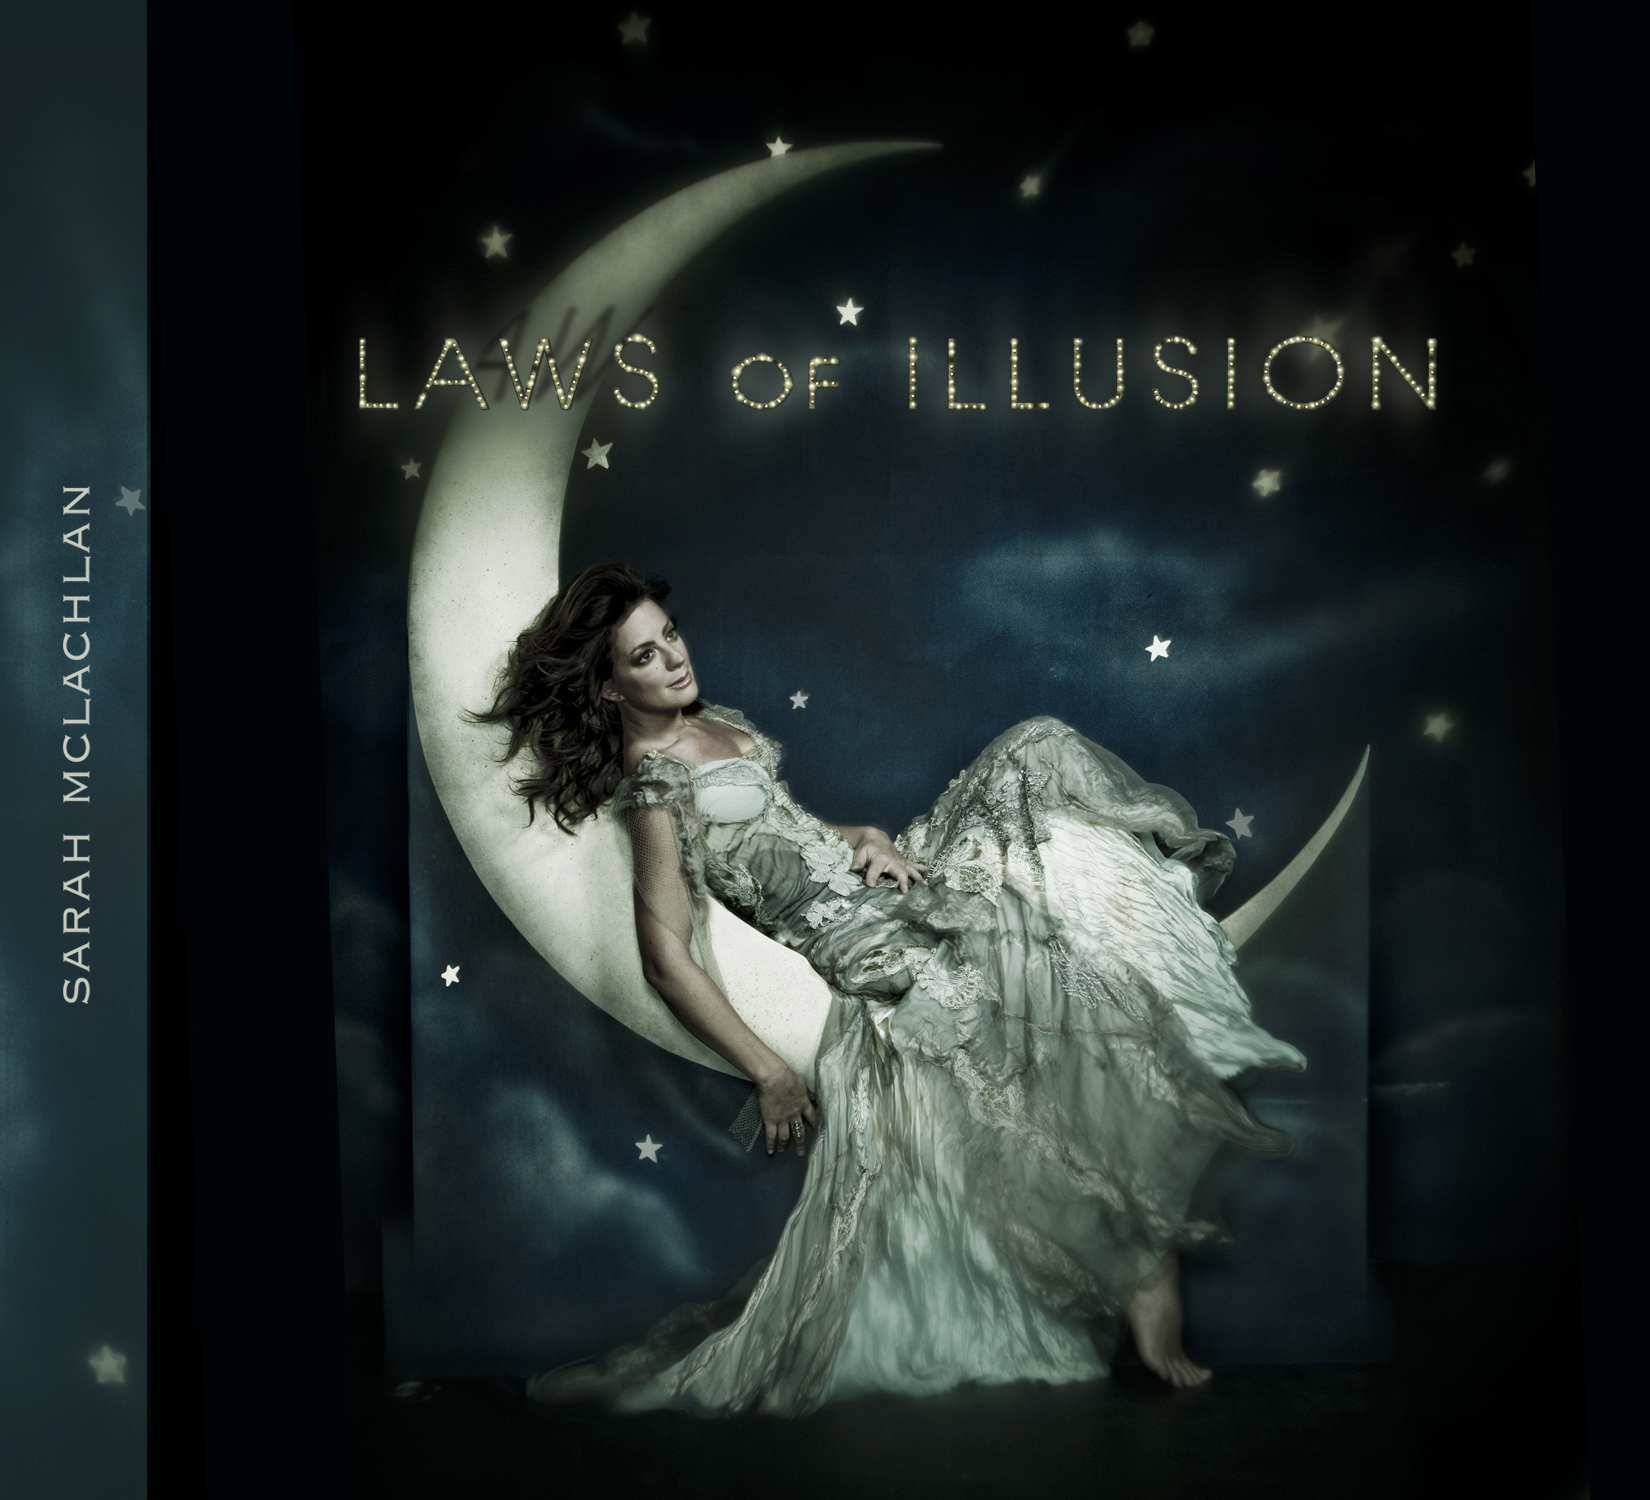 Sarah_Laws_Of_Illusion